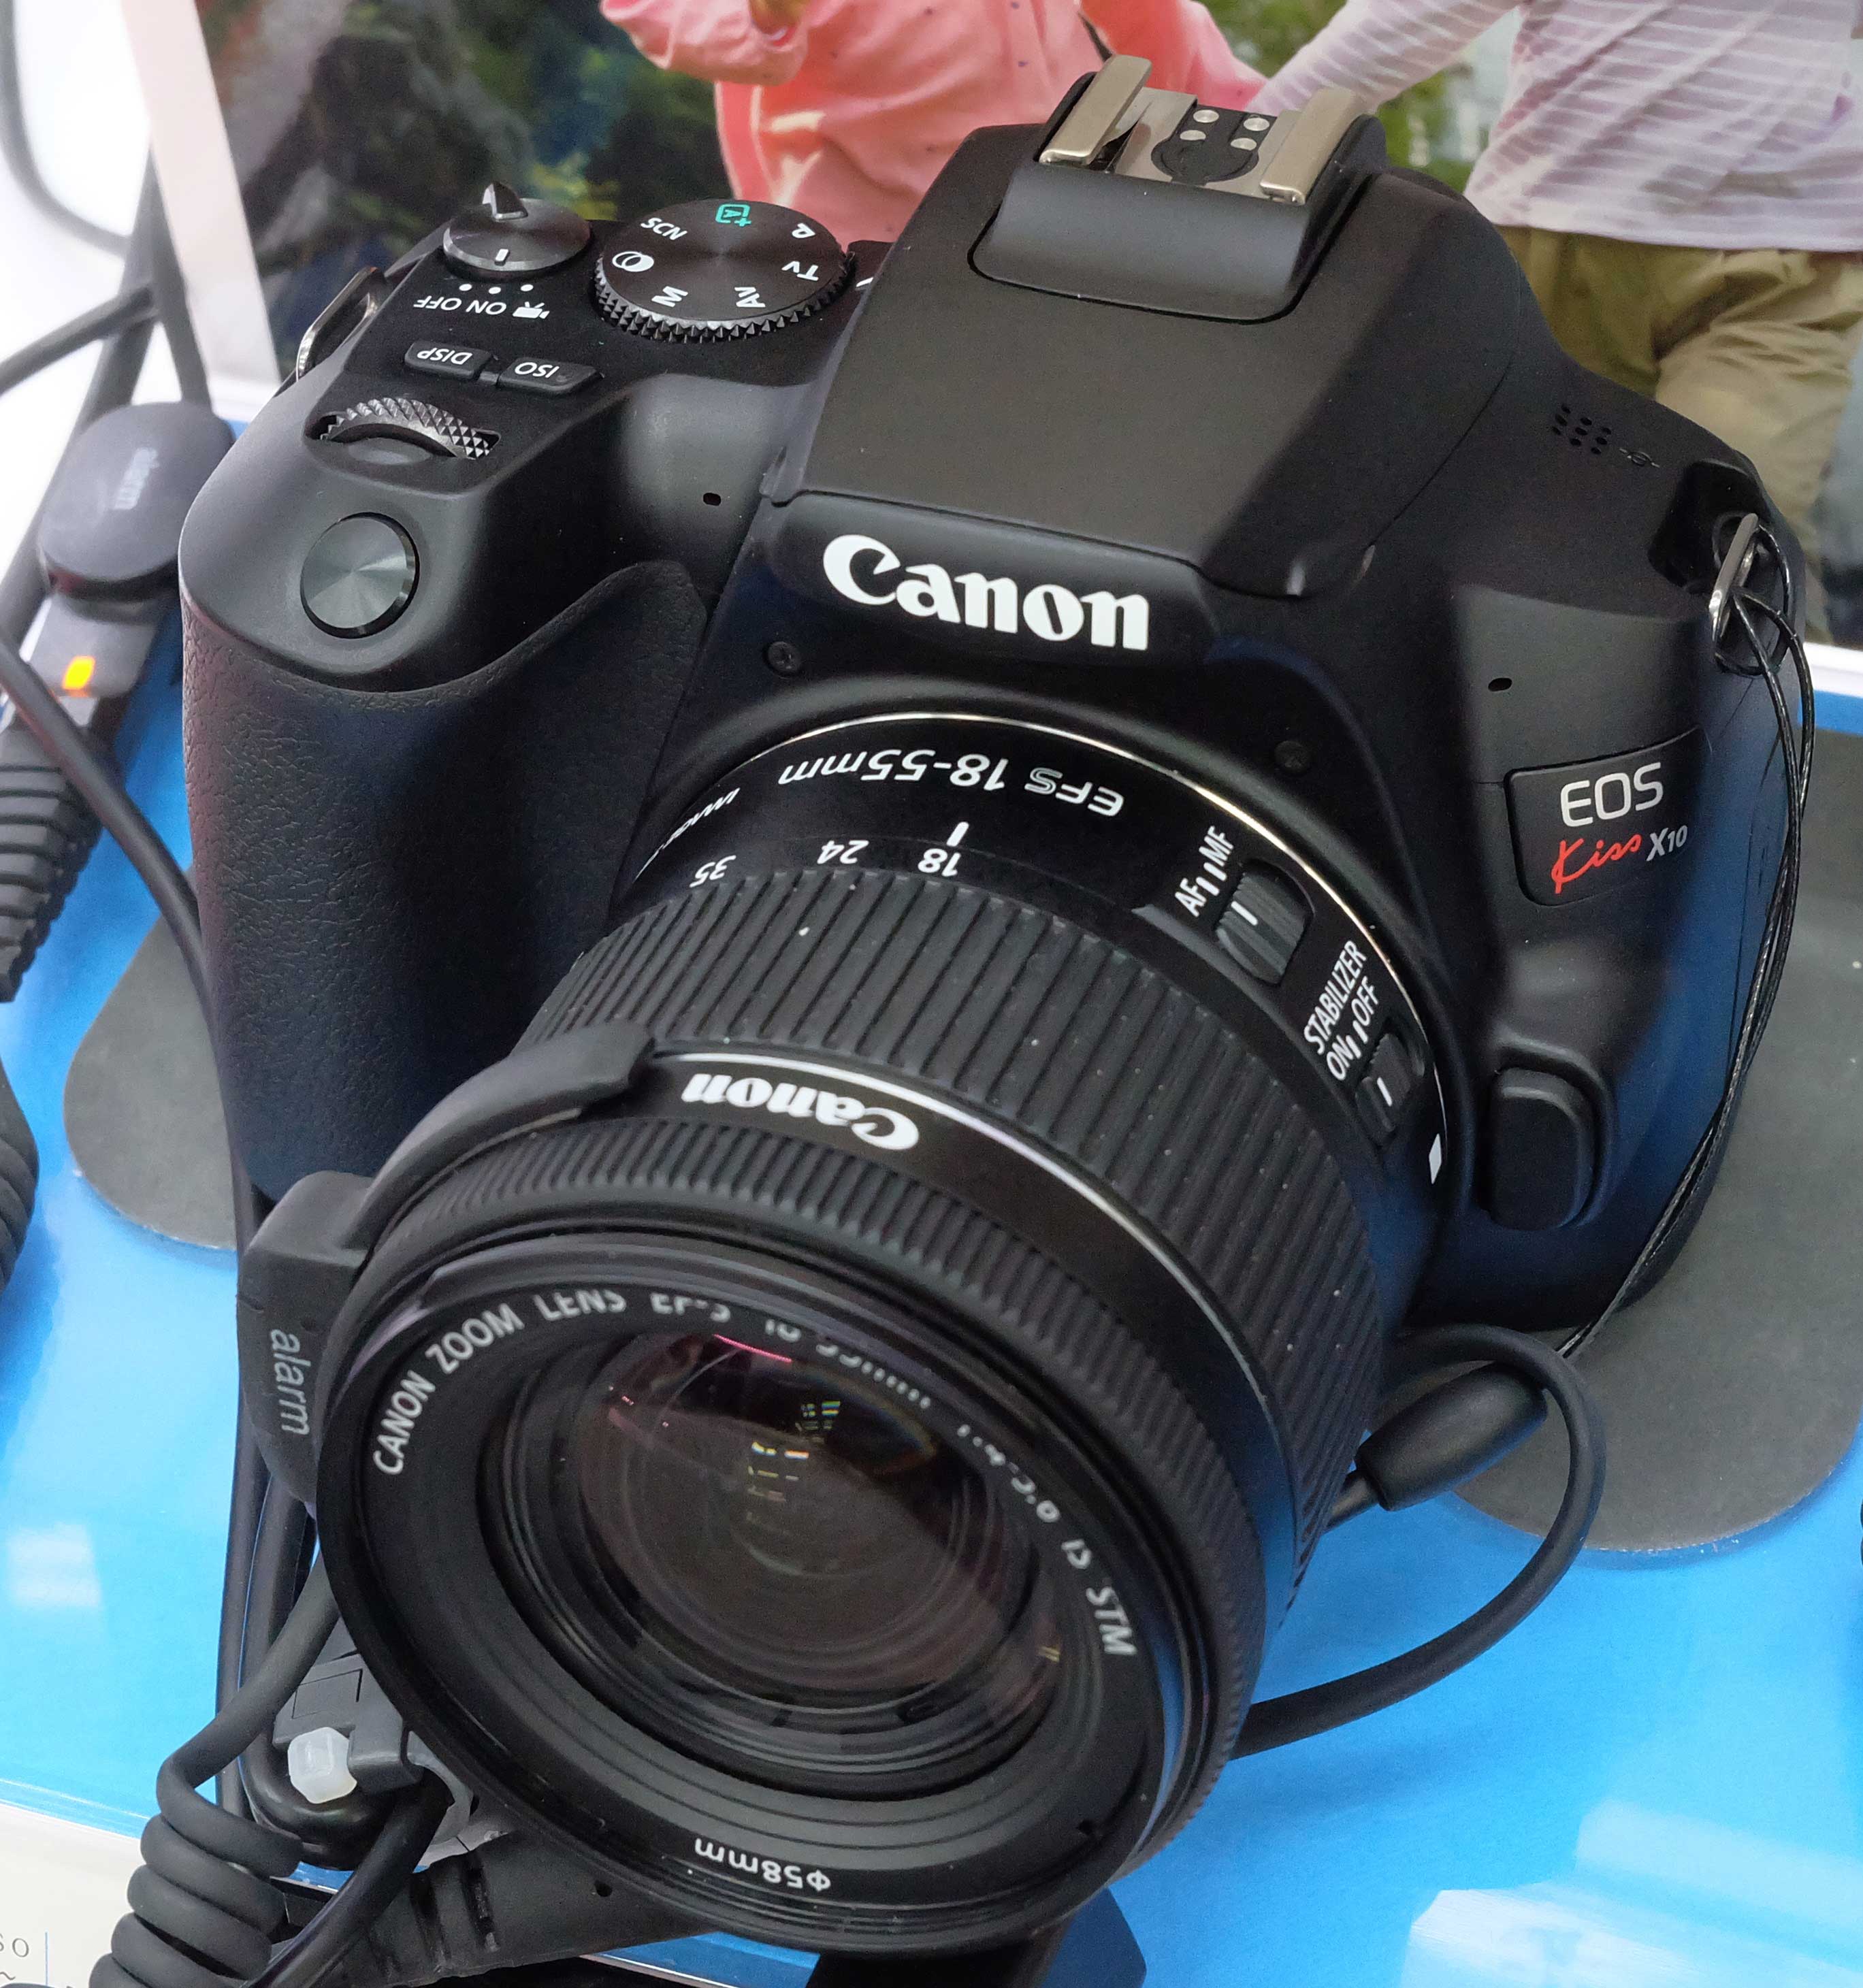 كانون كاميرا رقمية اي او اس 250D، 18- 55 ملم، 24.1 ميجابكسل، اسود